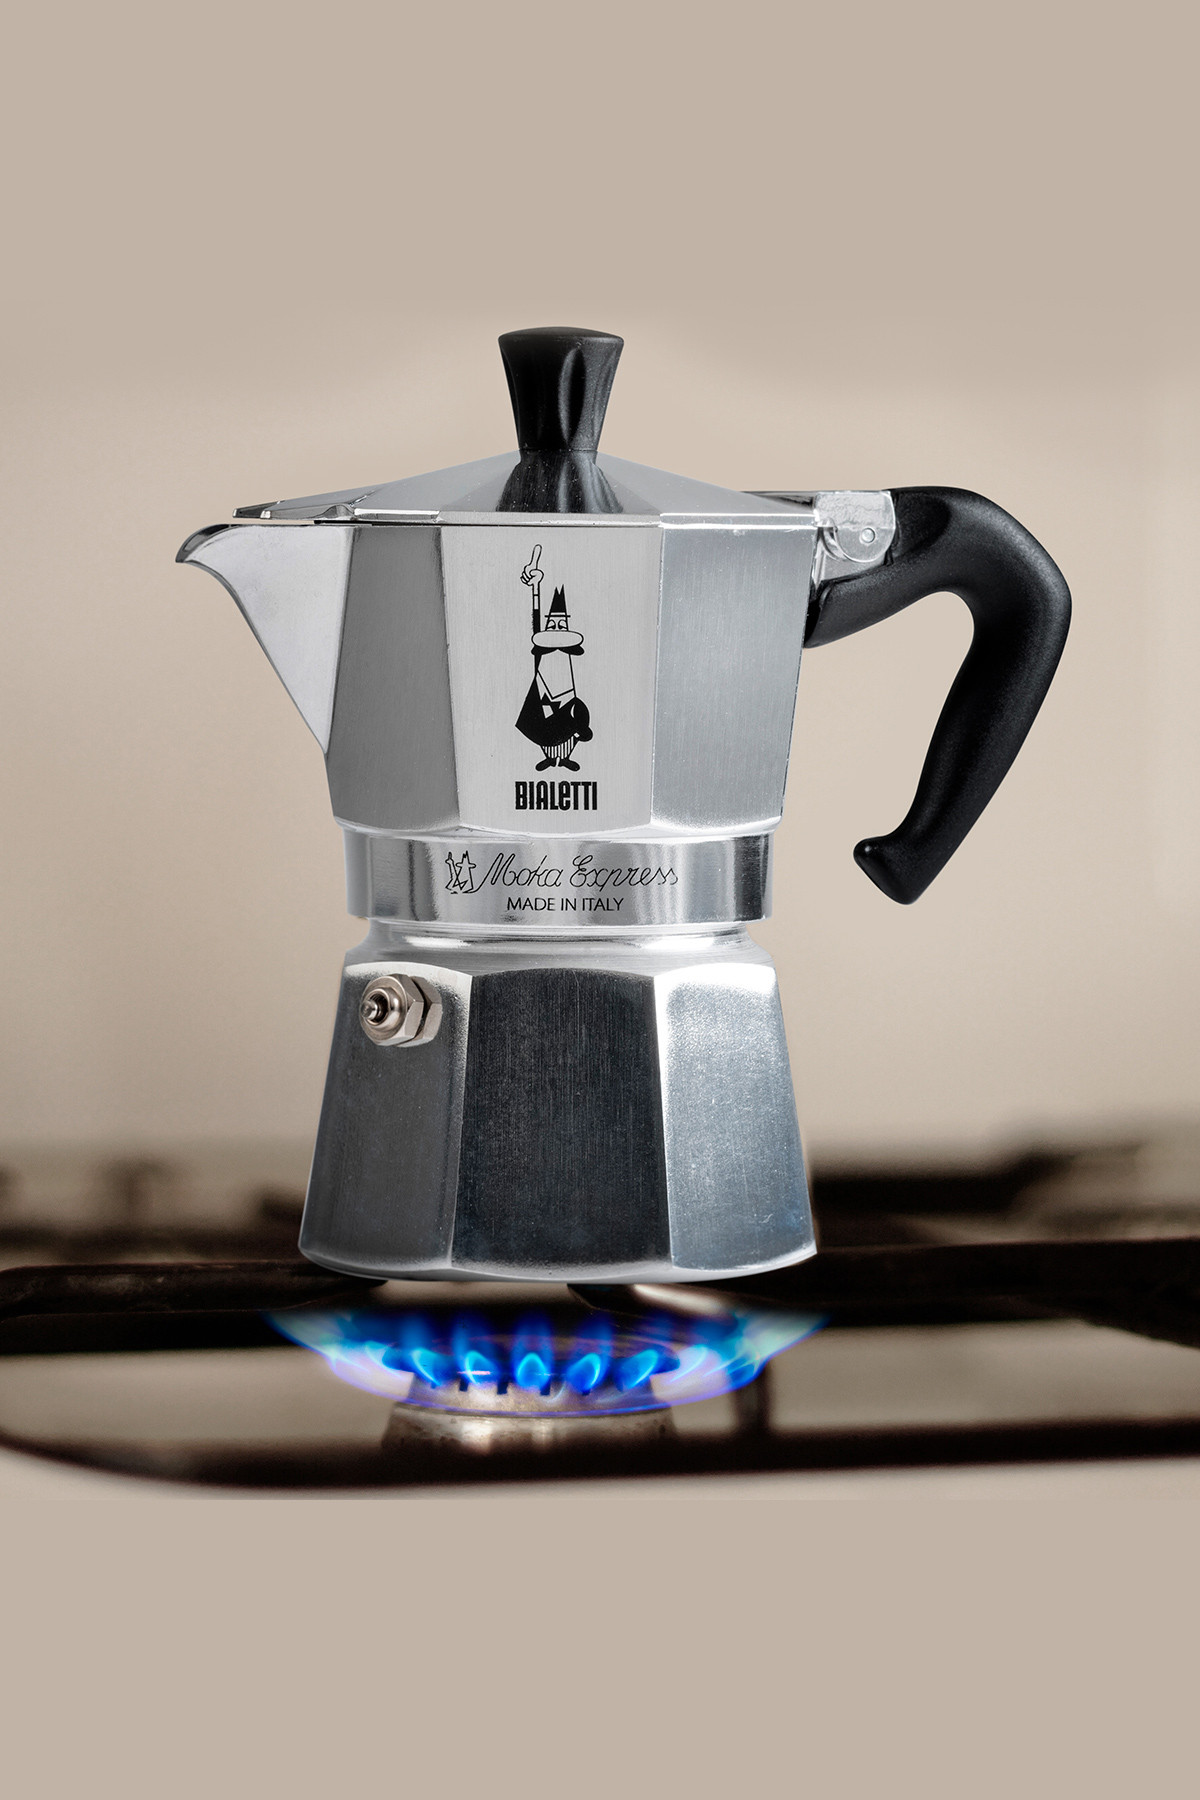 https://media.heirol.fi/587299_7/1200/espresso-pan-9-cups-moka-express_.jpg